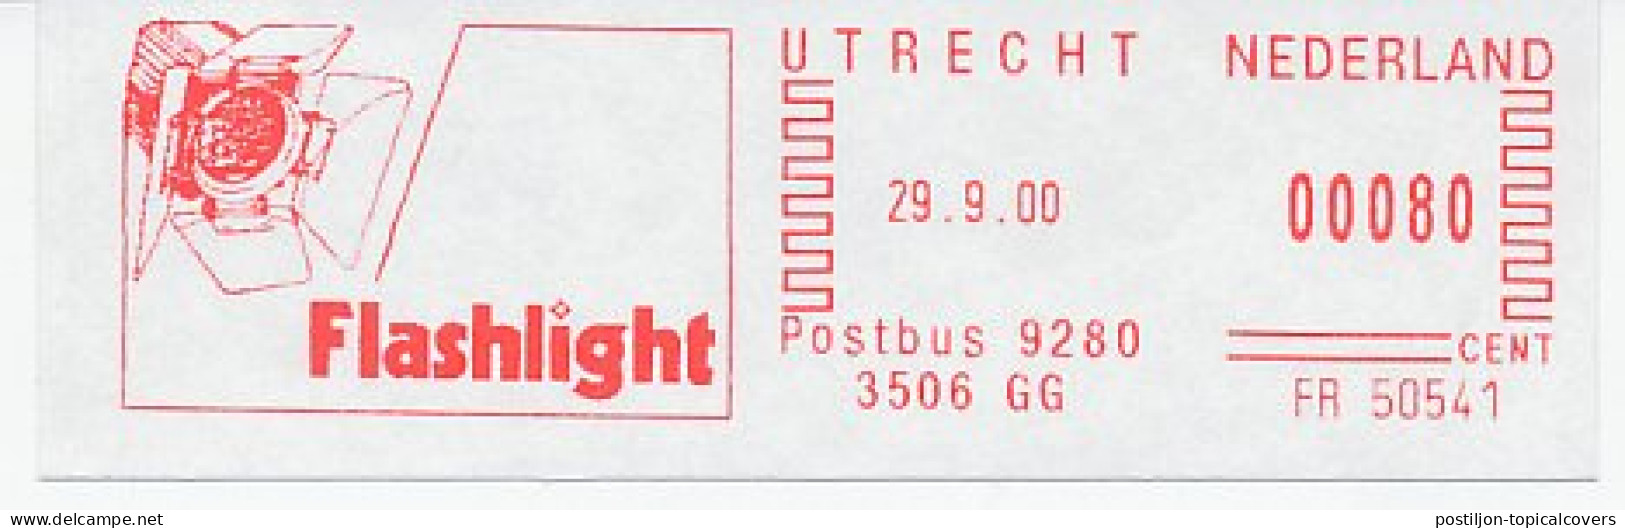 Meter Cut Netherlands 2000 Lamp - Flashlight - Electricité